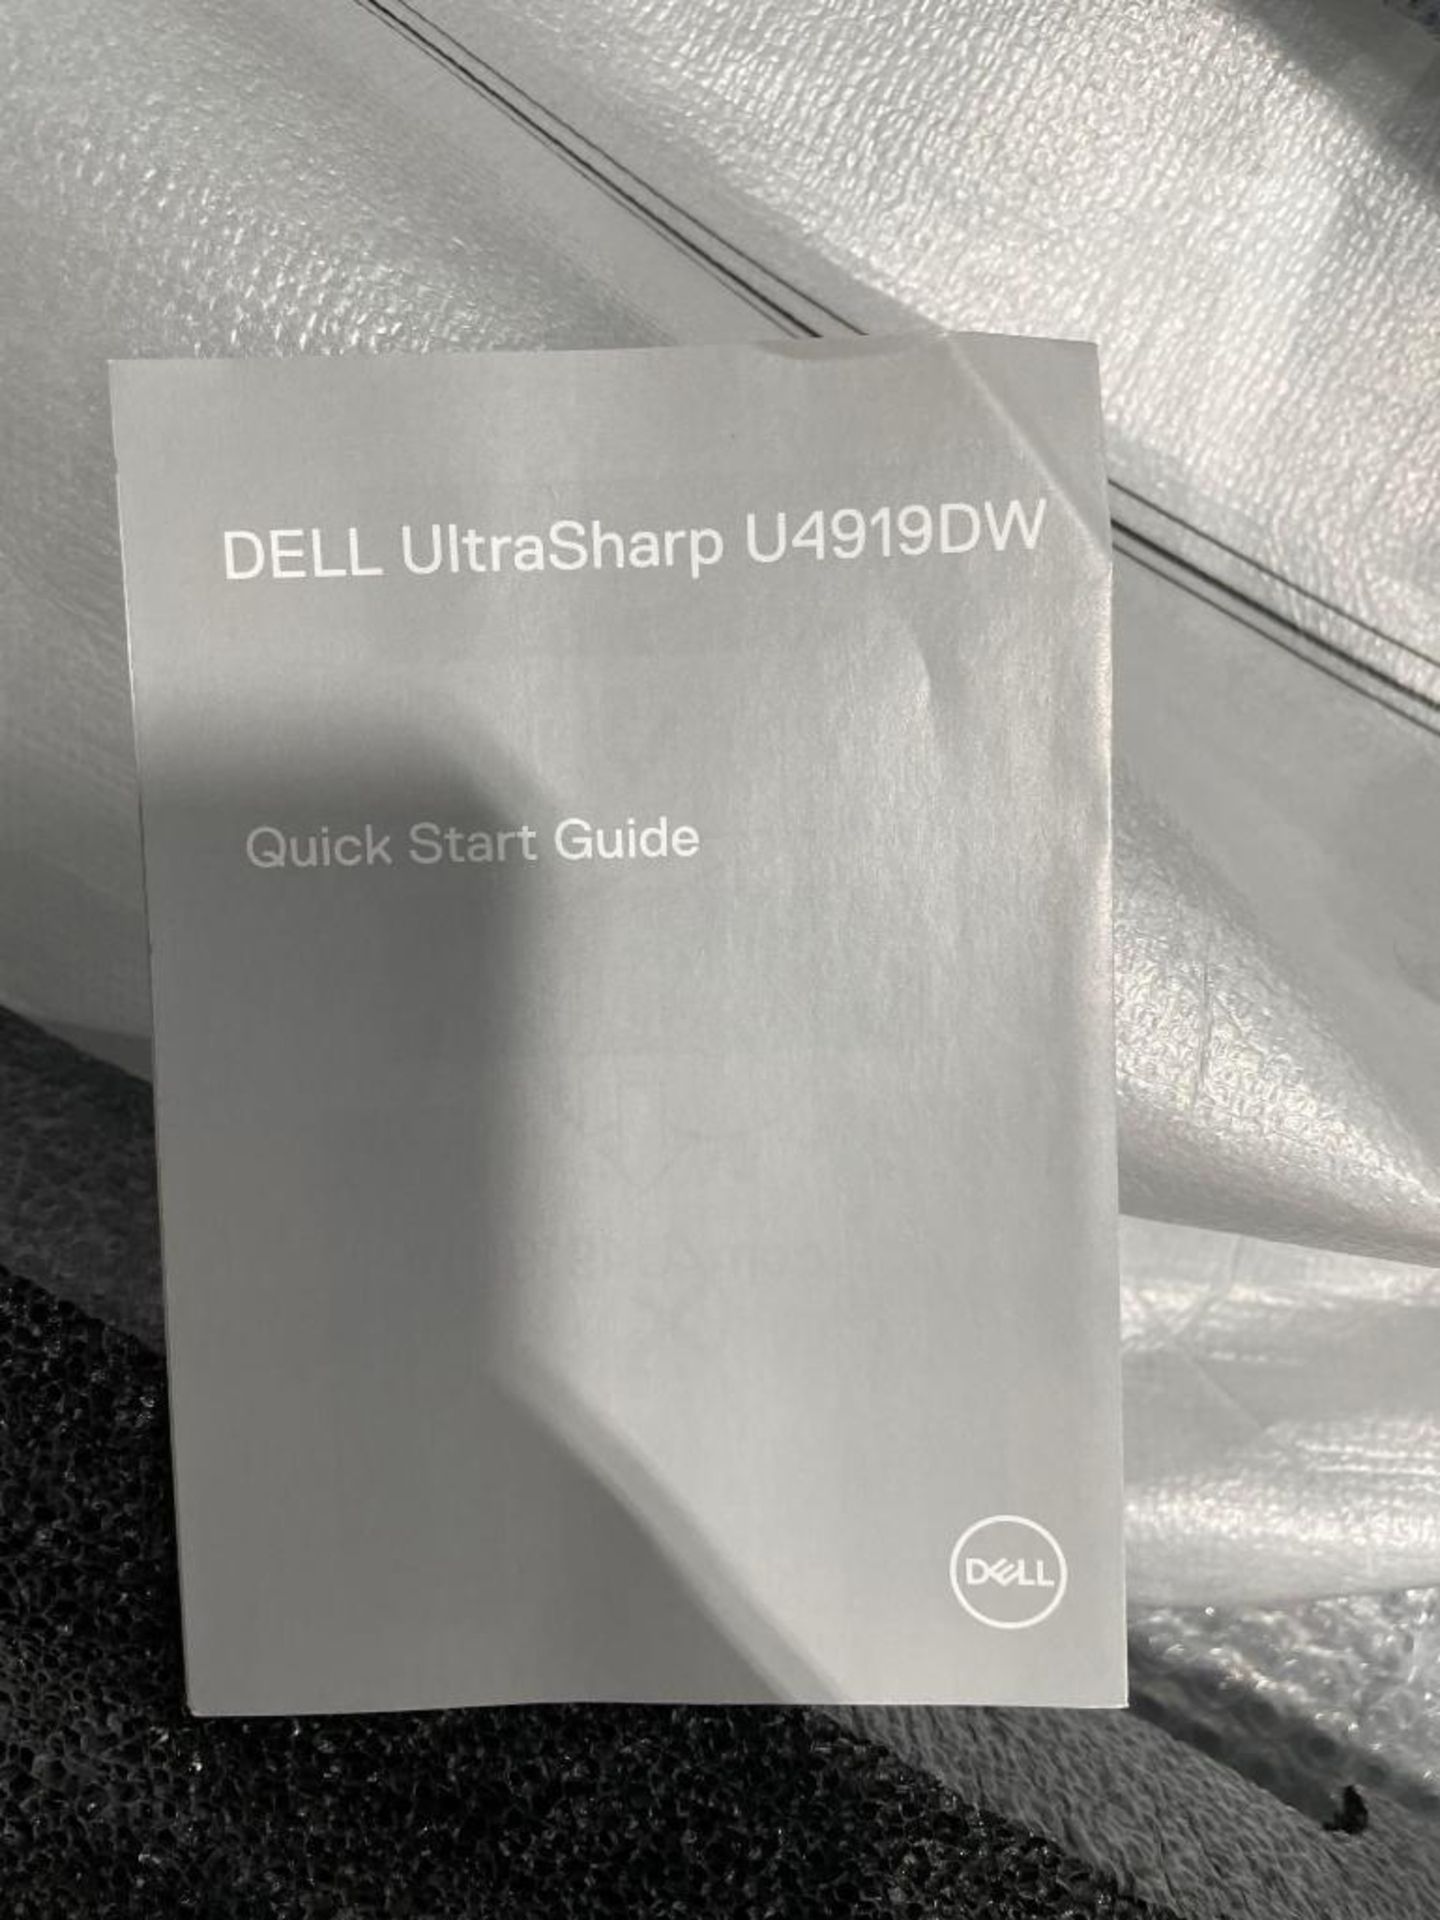 Dell Ultrasharp U4919DW Monitor - Image 2 of 5